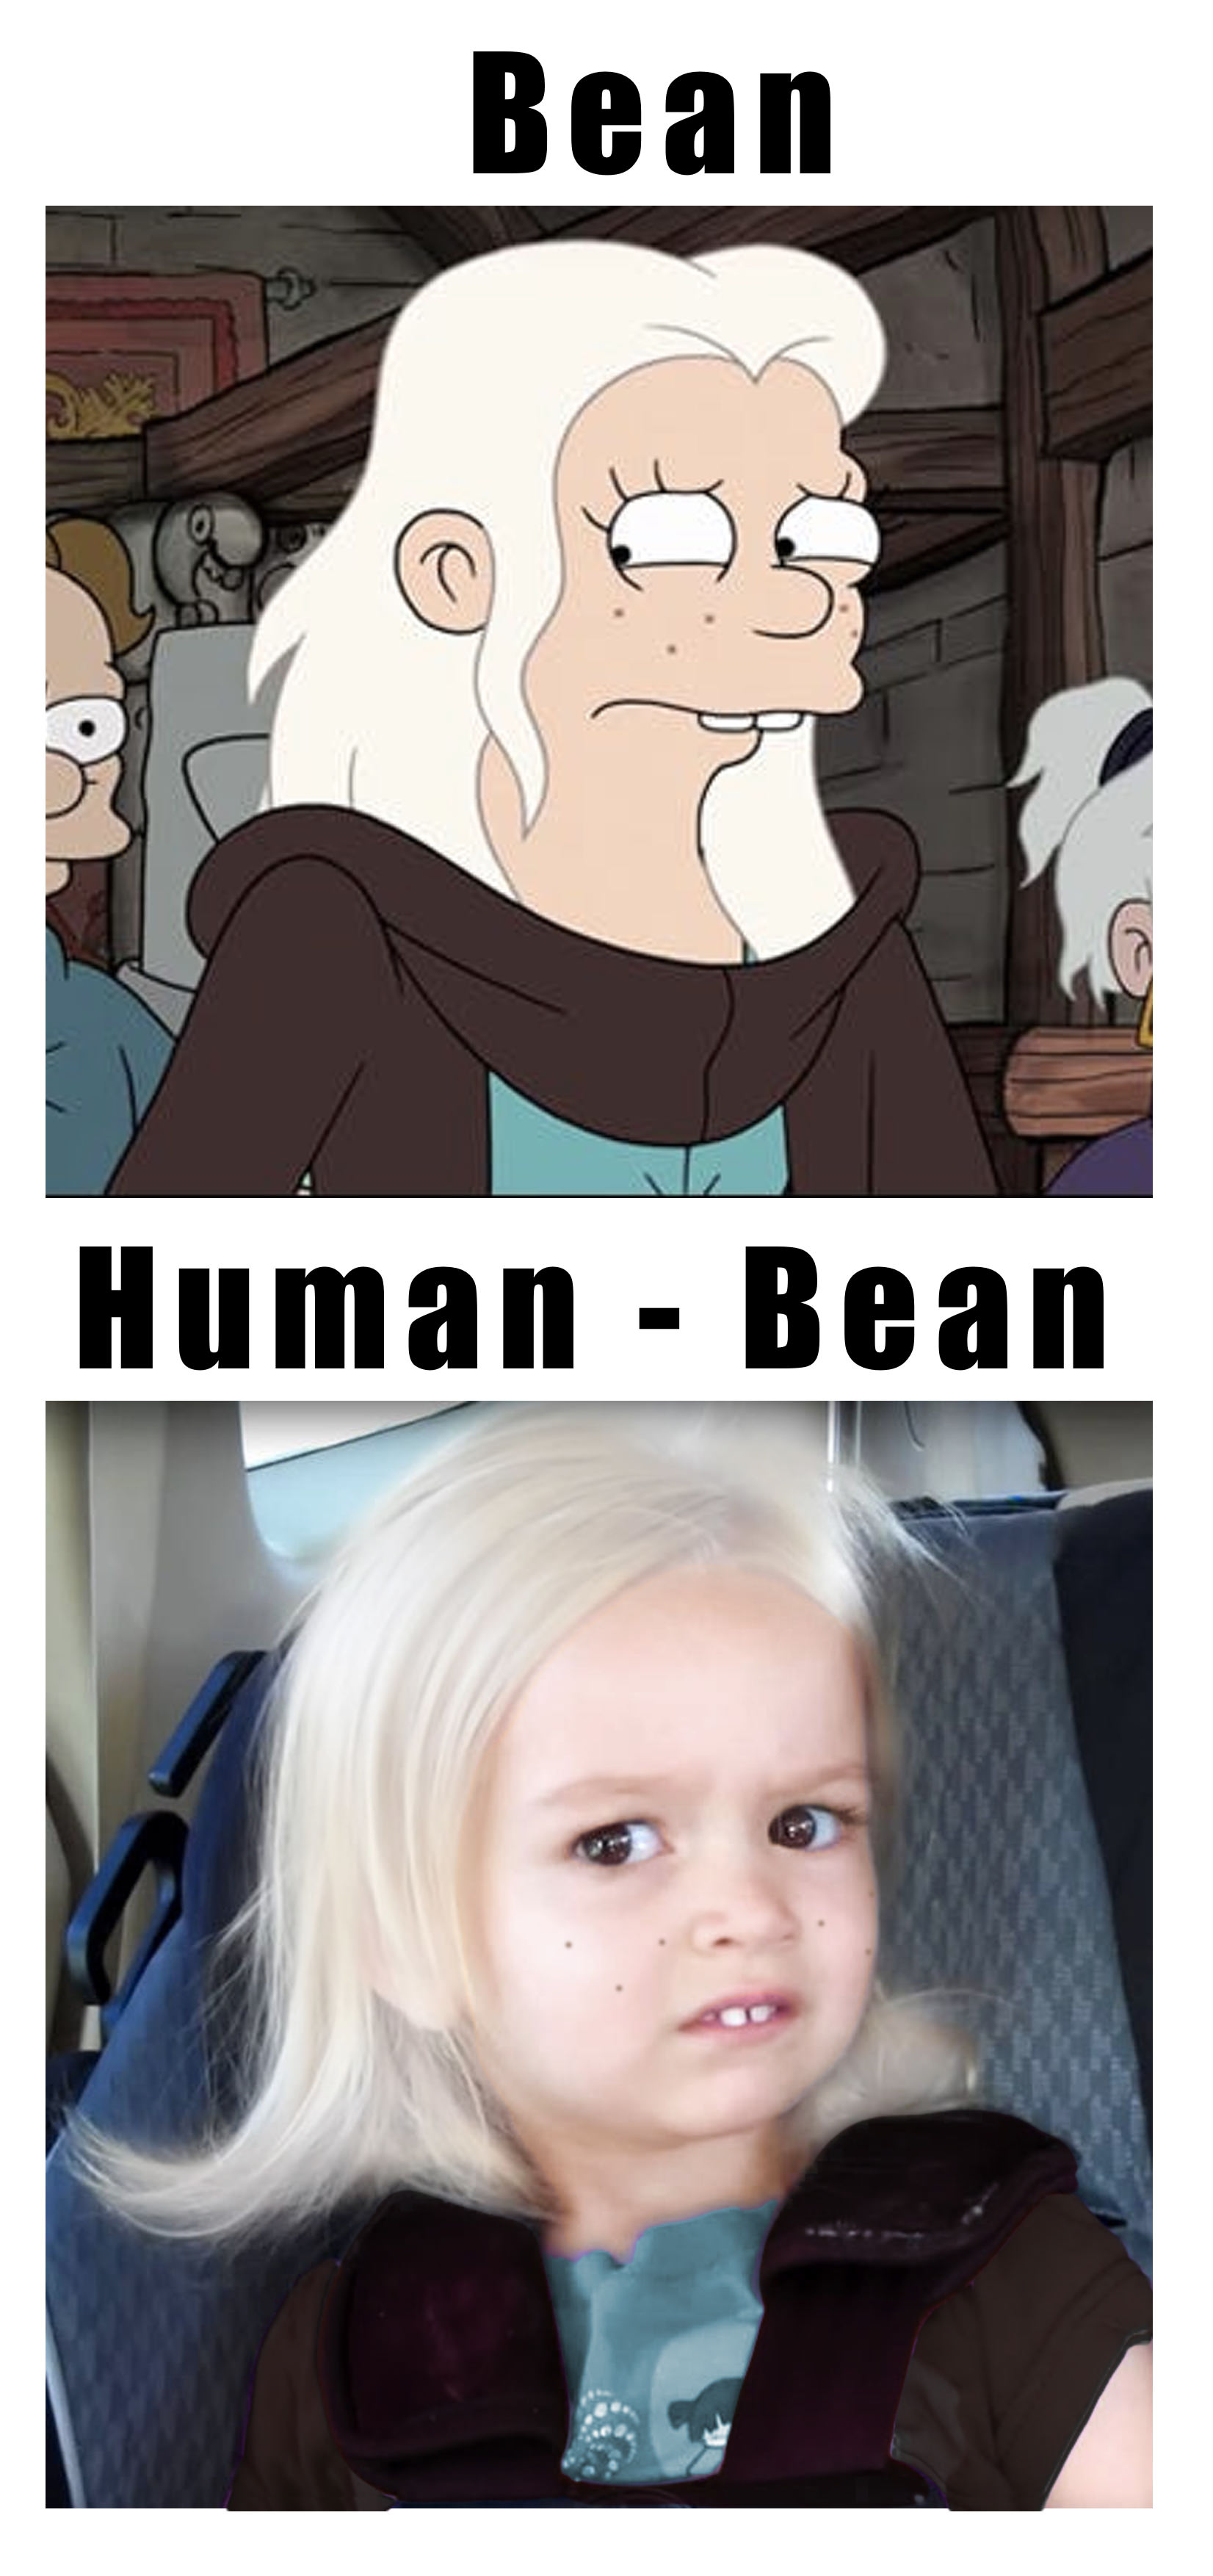 memes - disenchantment bean meme - Bean Human Bean Human Bean